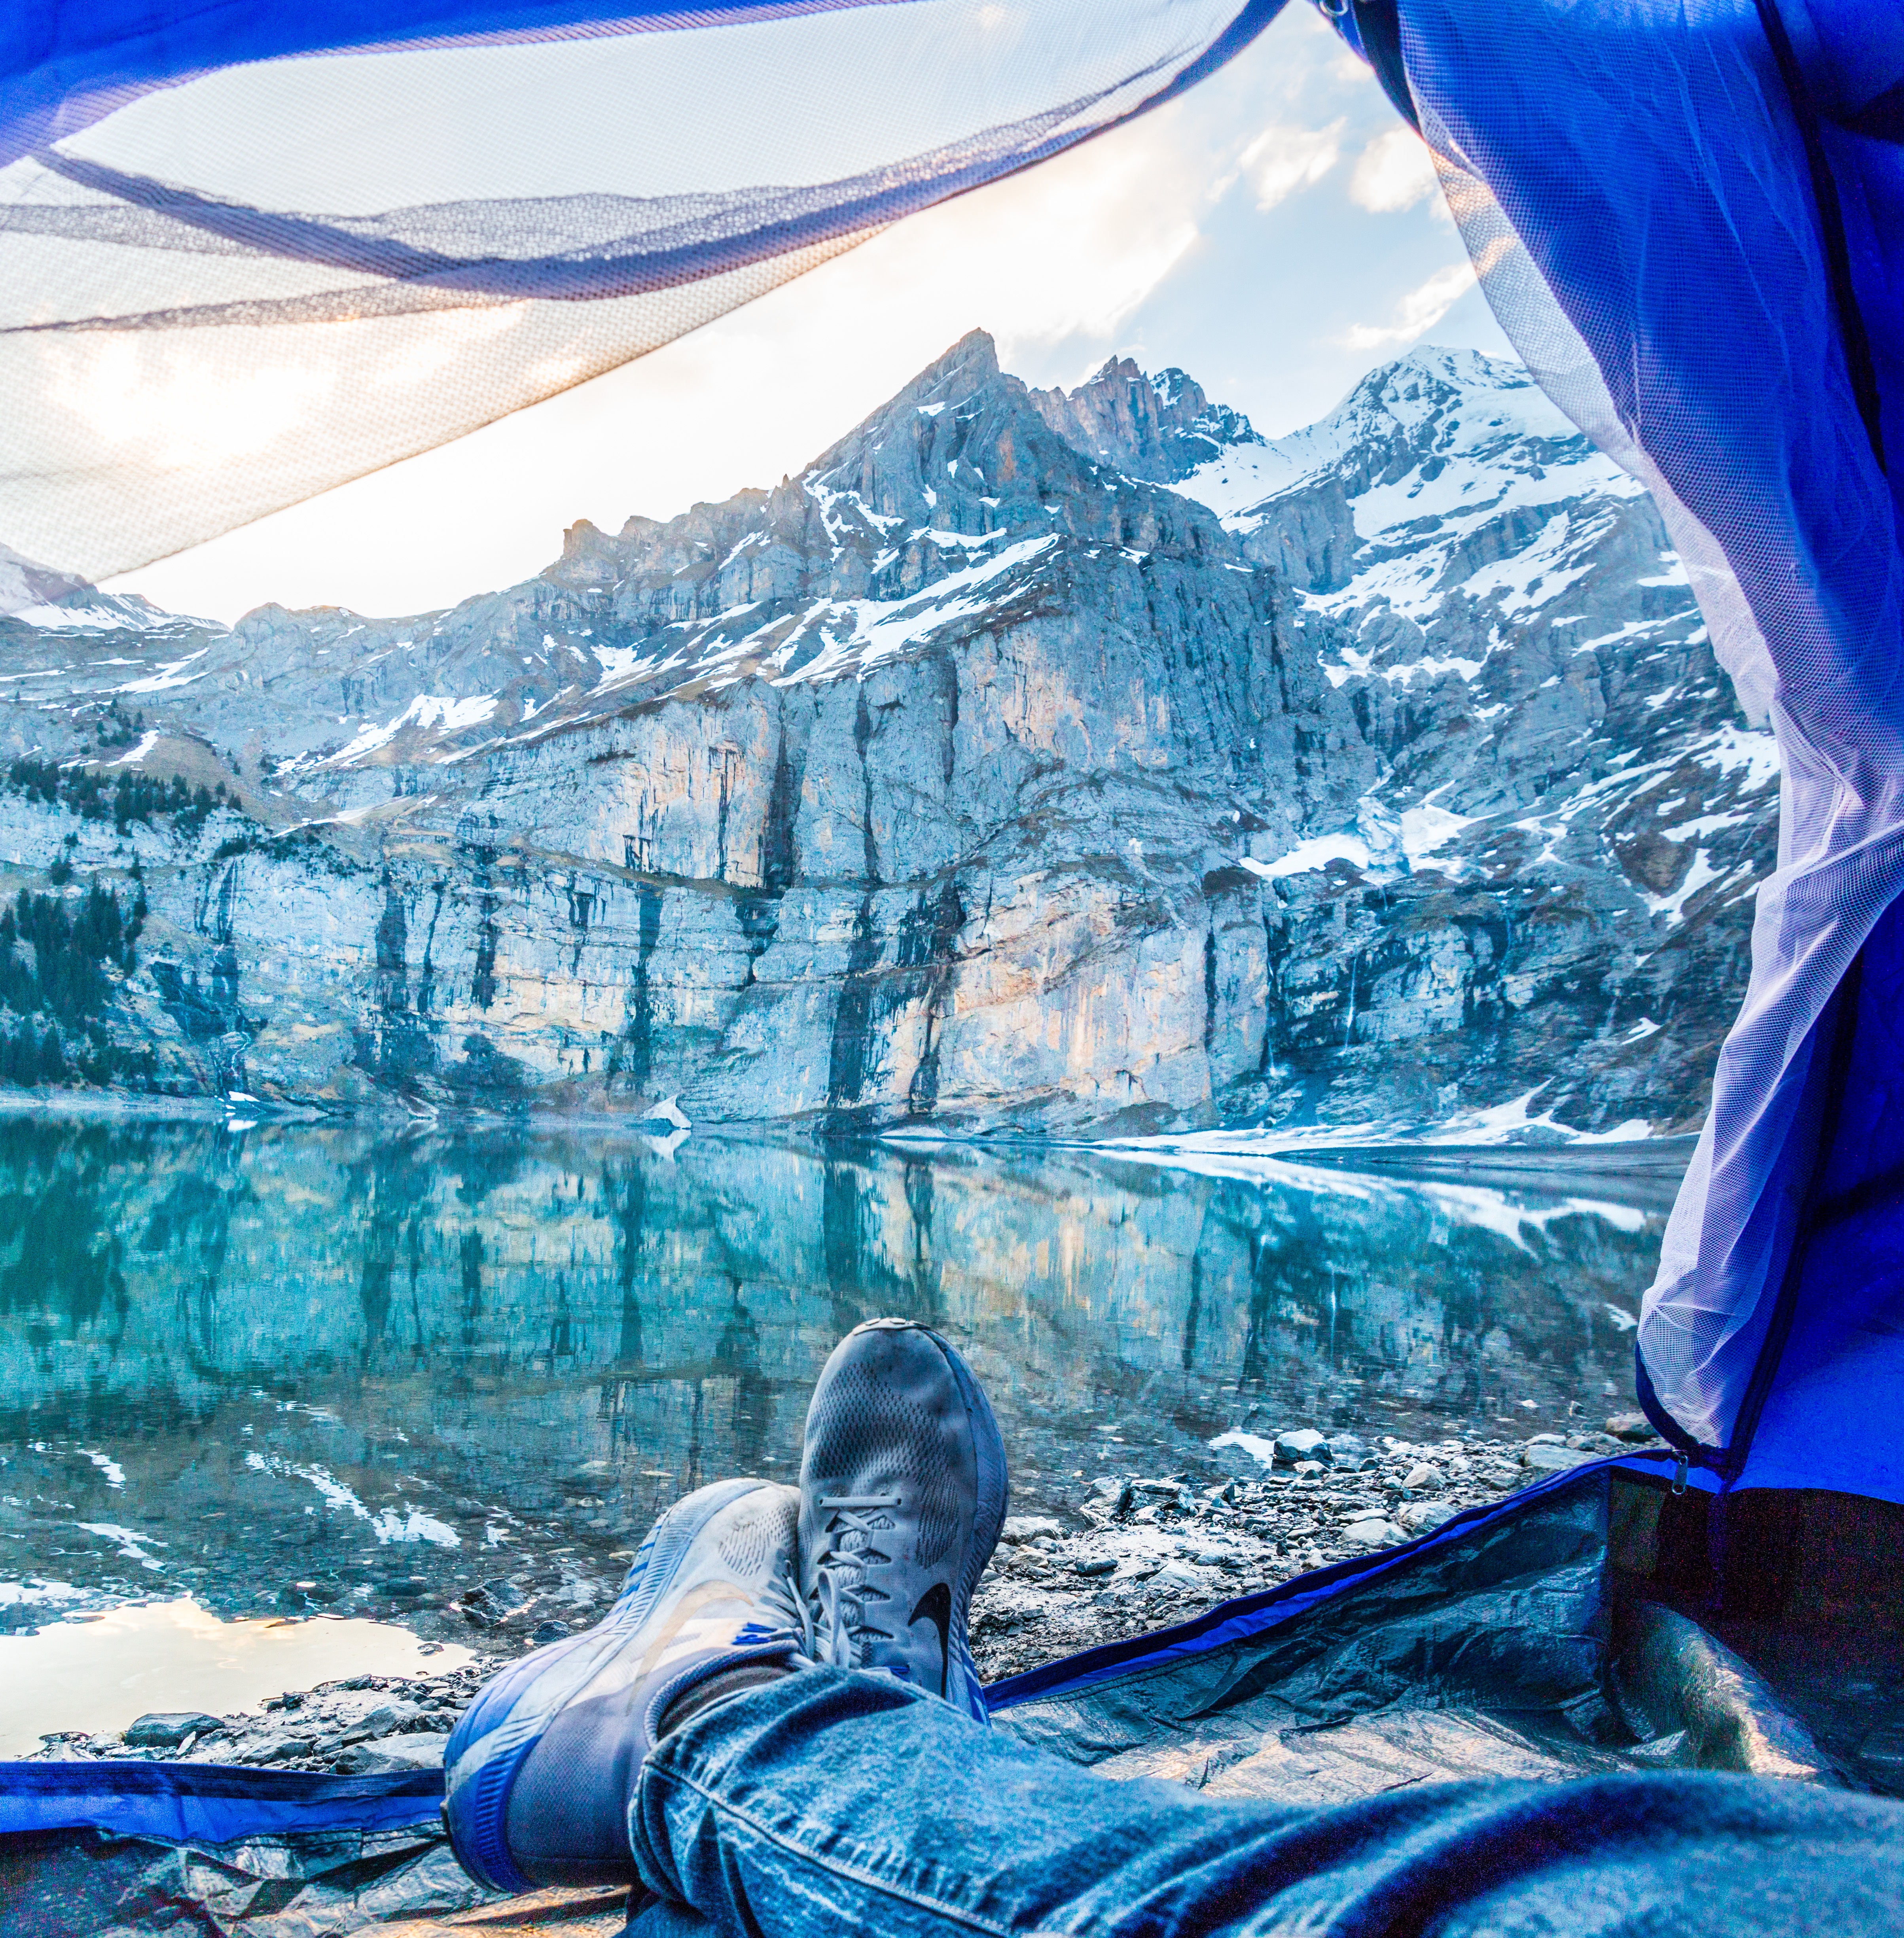 mountains, lake, miscellanea, miscellaneous, legs, tent, camping, campsite, tourism